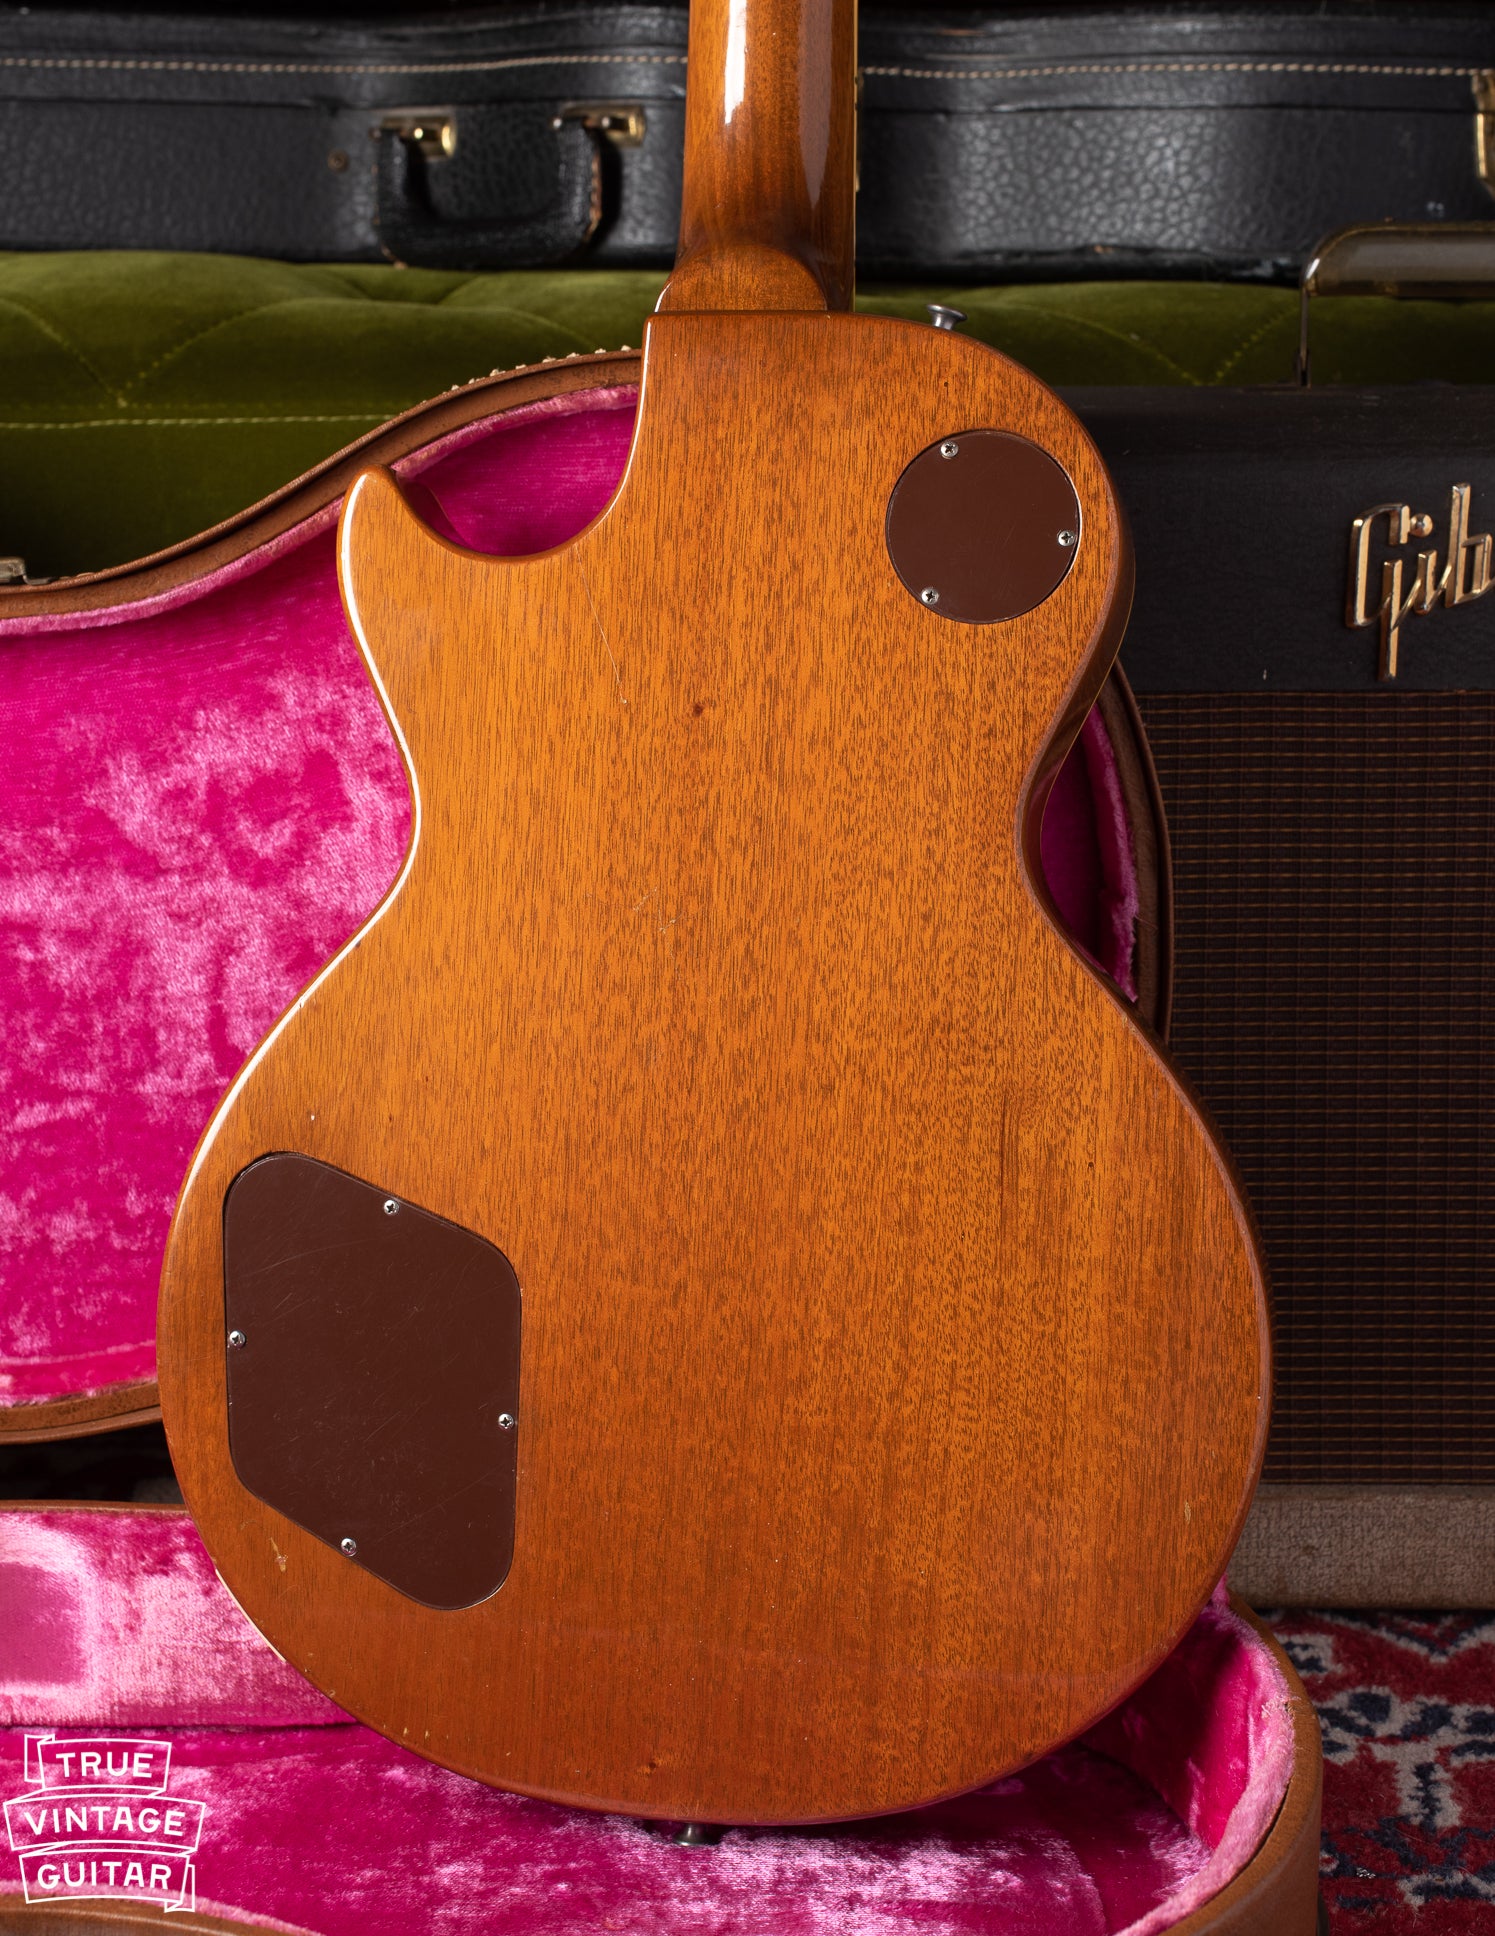 Mahogany body of 1952 Gibson Les Paul guitar